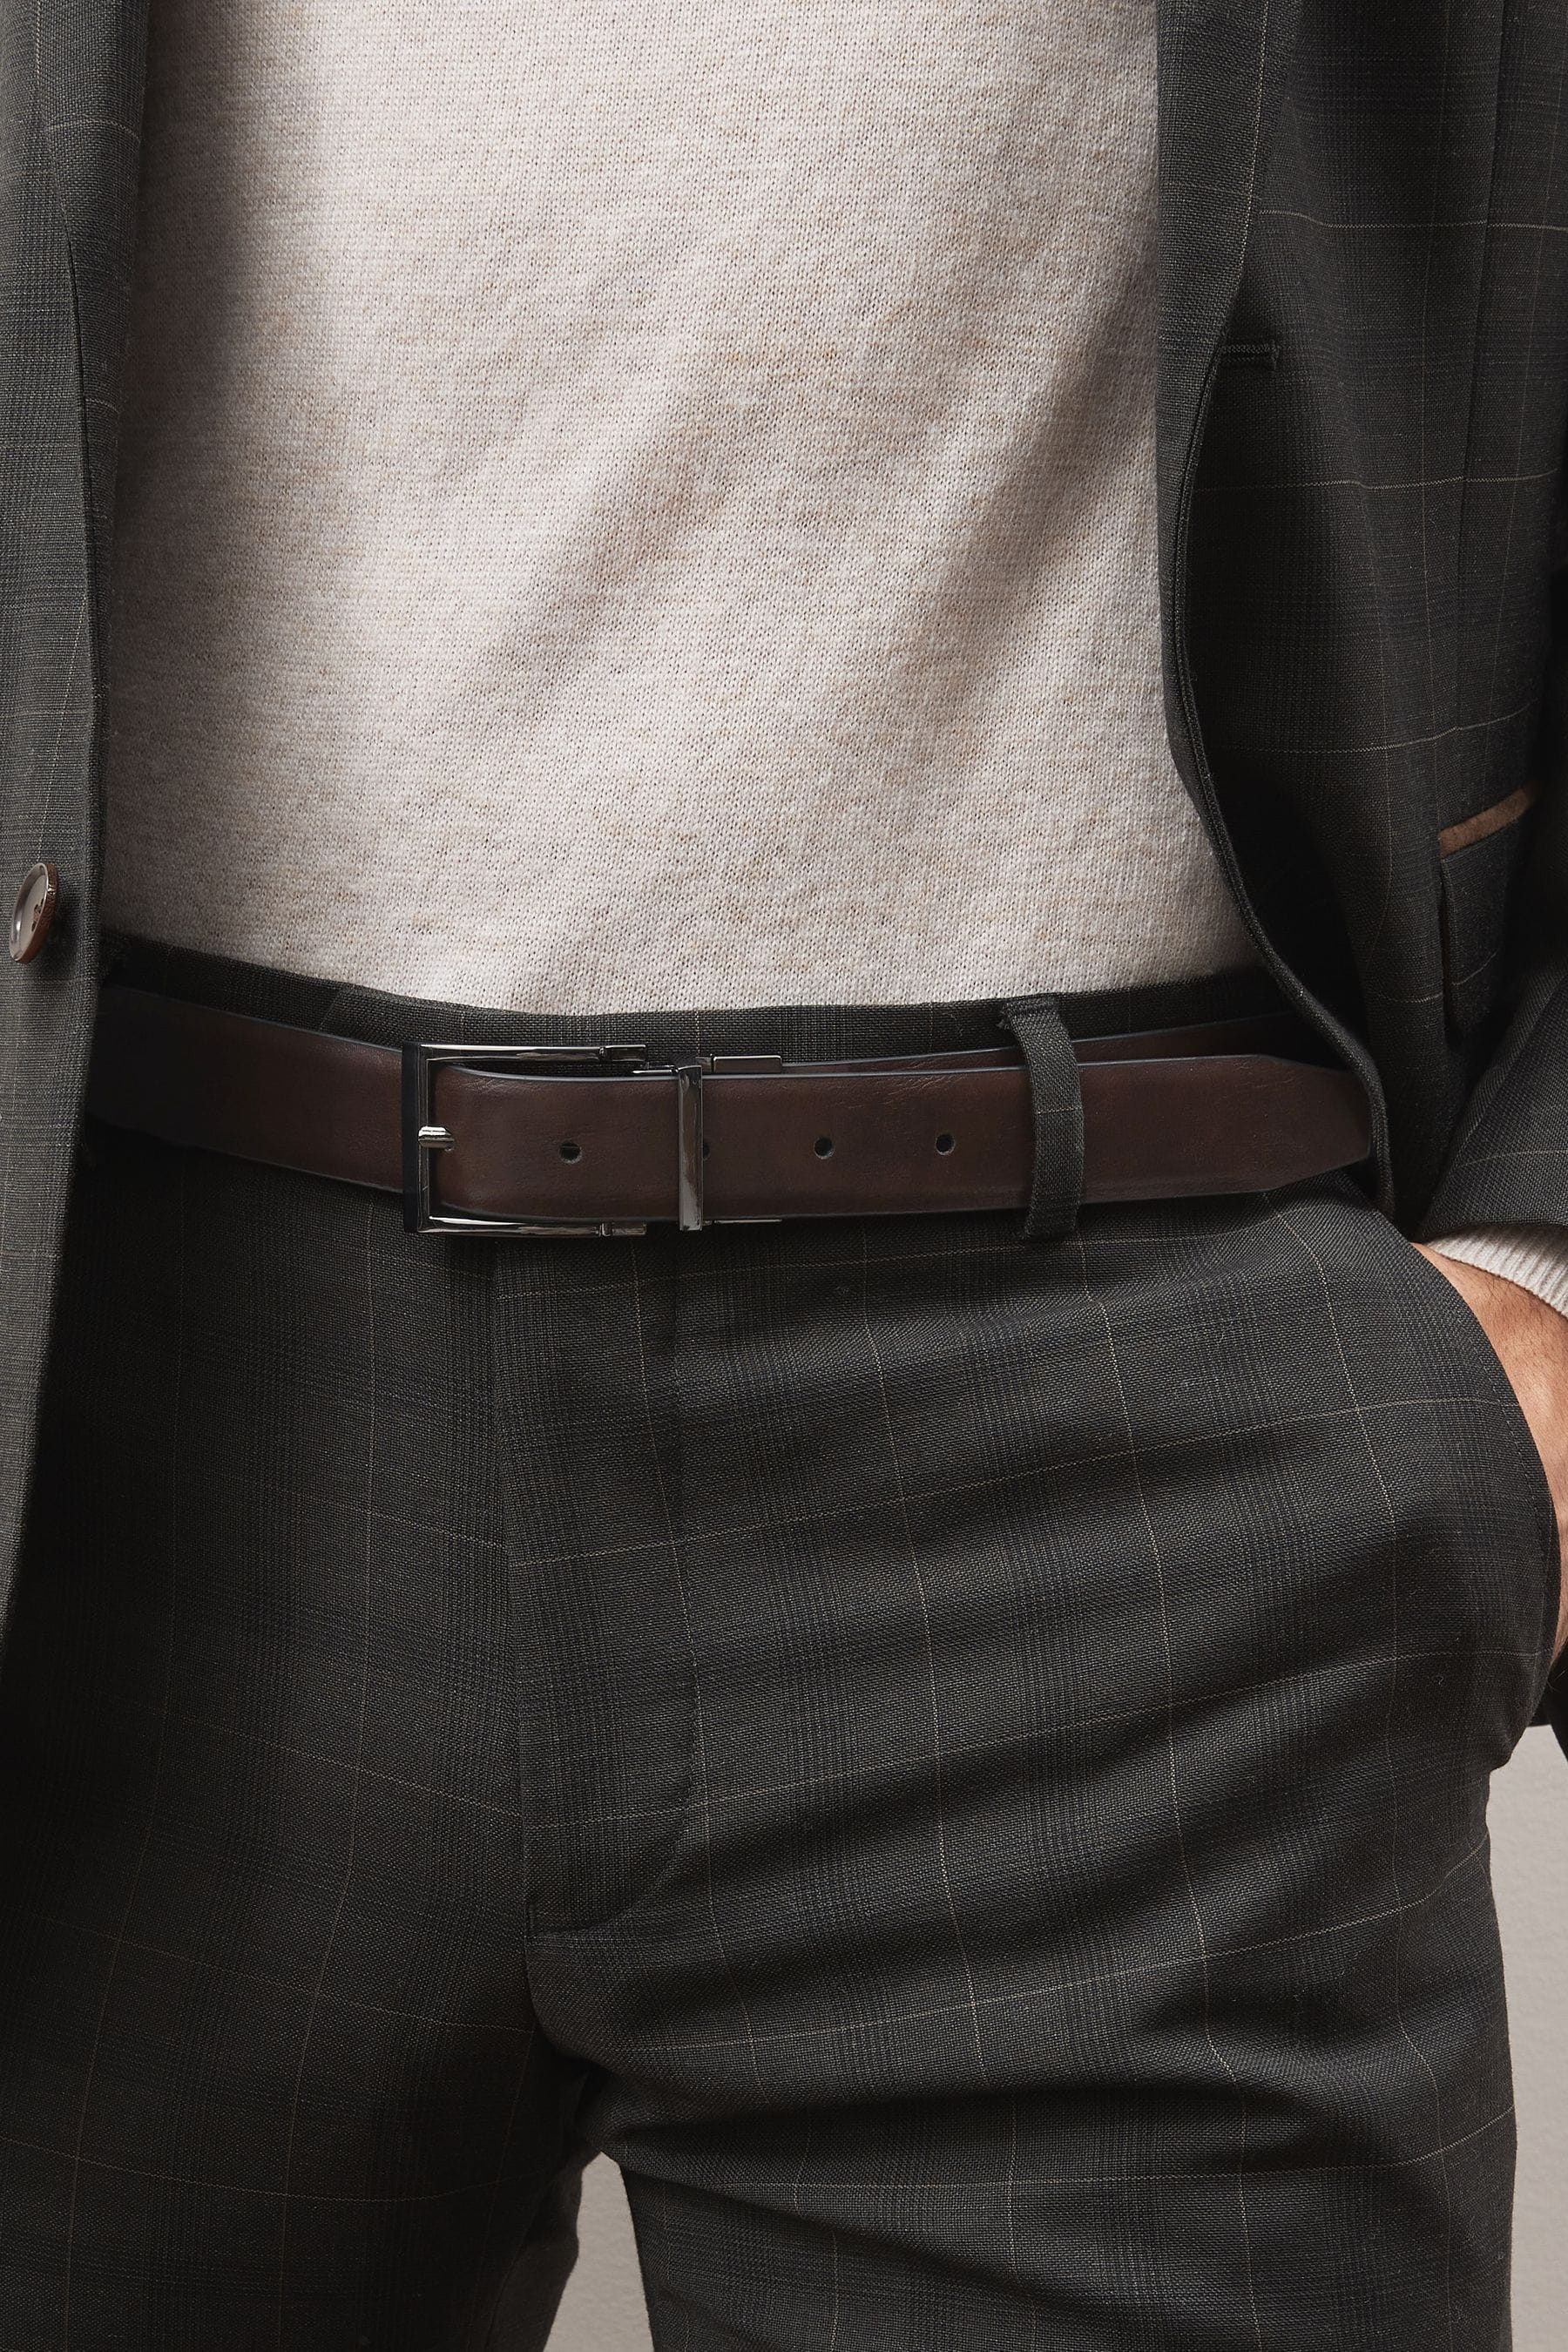 Buy Black/Brown Reversible Belt from the Next UK online shop